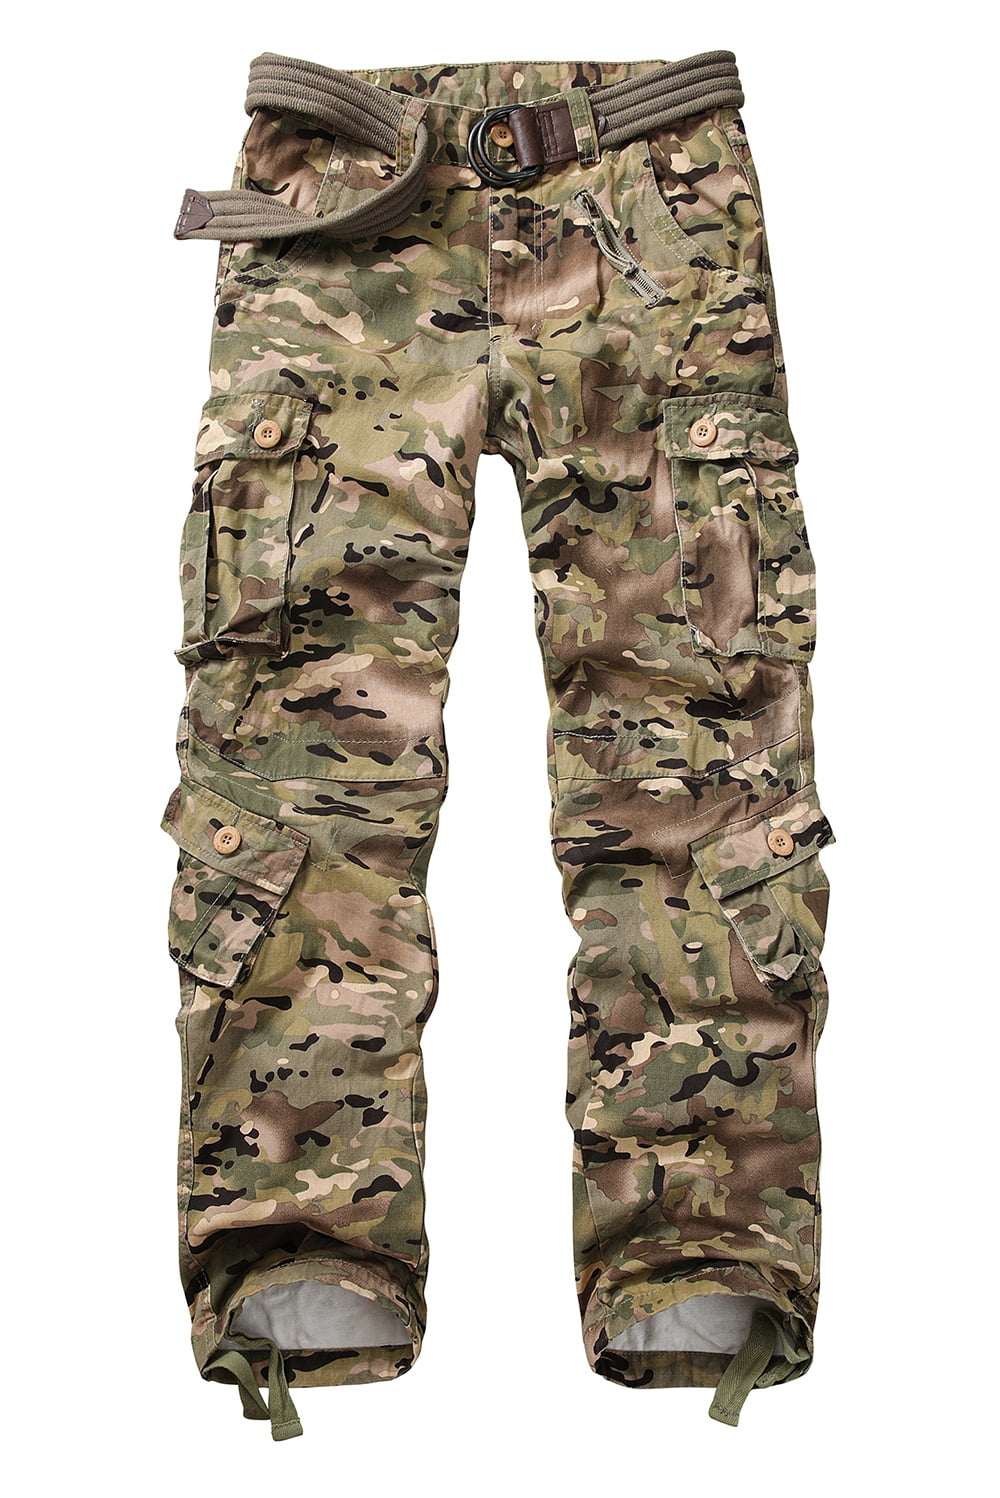 TRGPSG Men's Cargo Pants with 8 Pockets Cotton Cargo Work Pants(No Belt ...